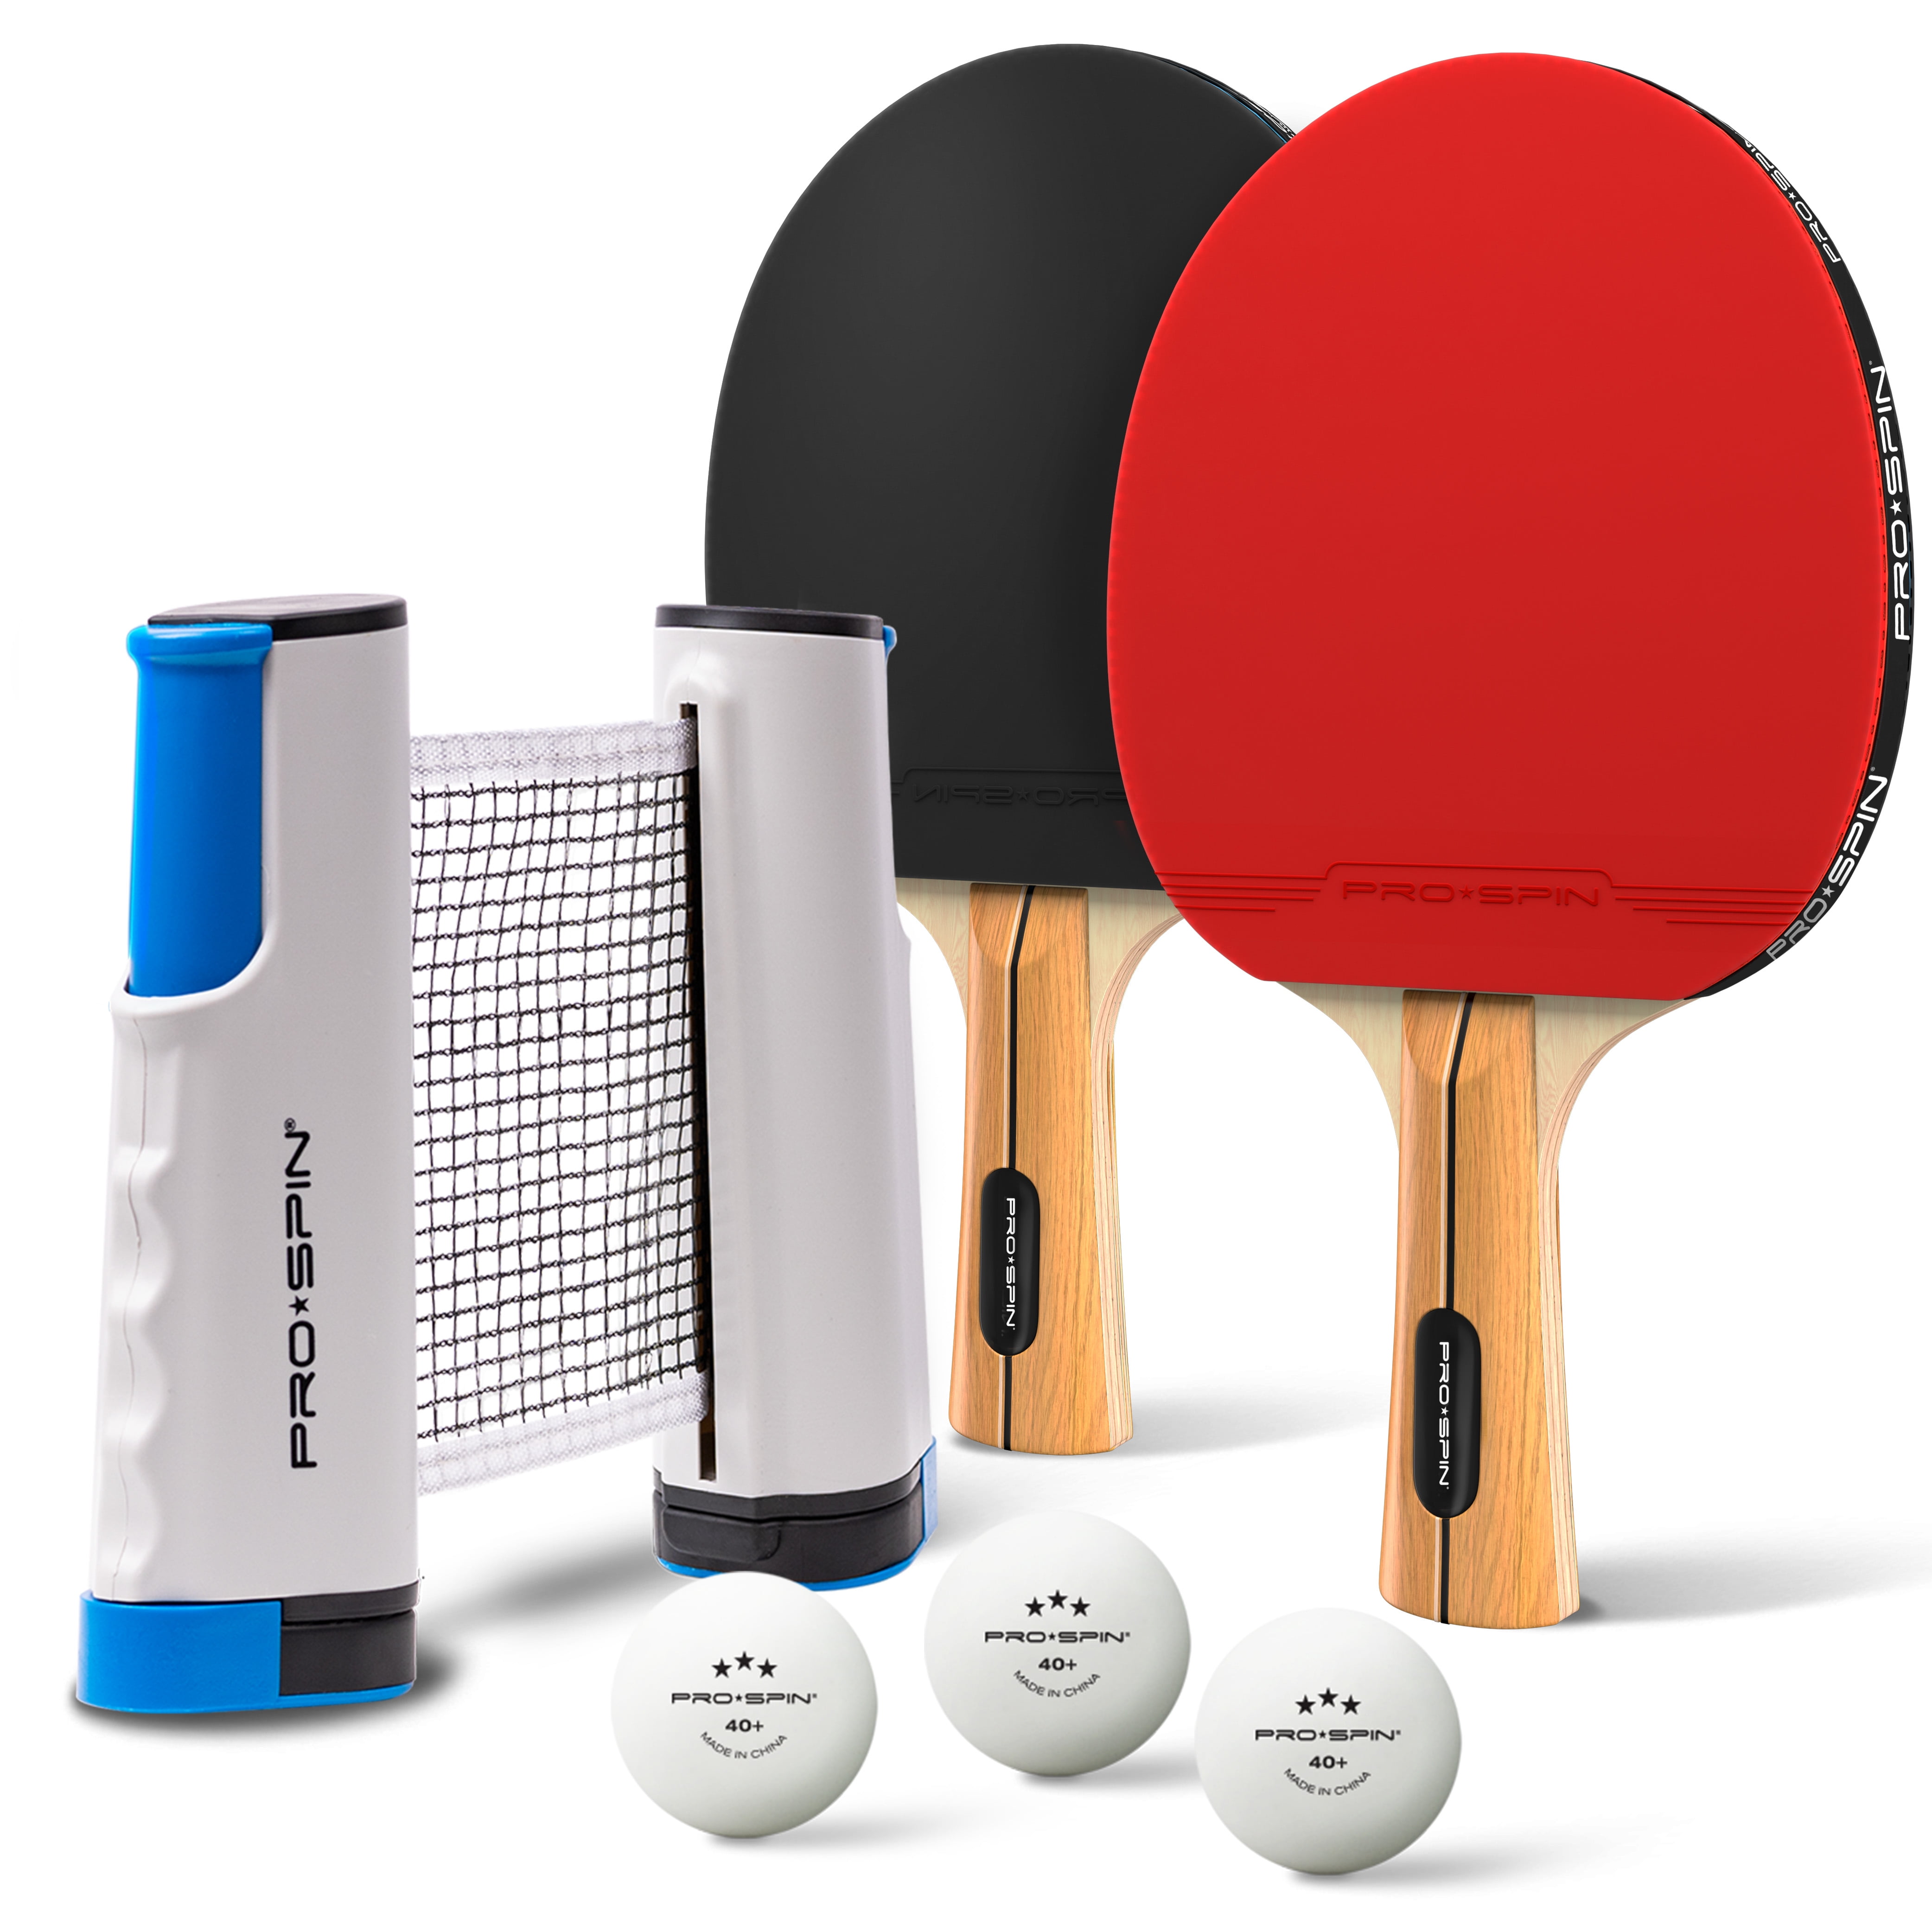 Shop Ping Pong Set Online